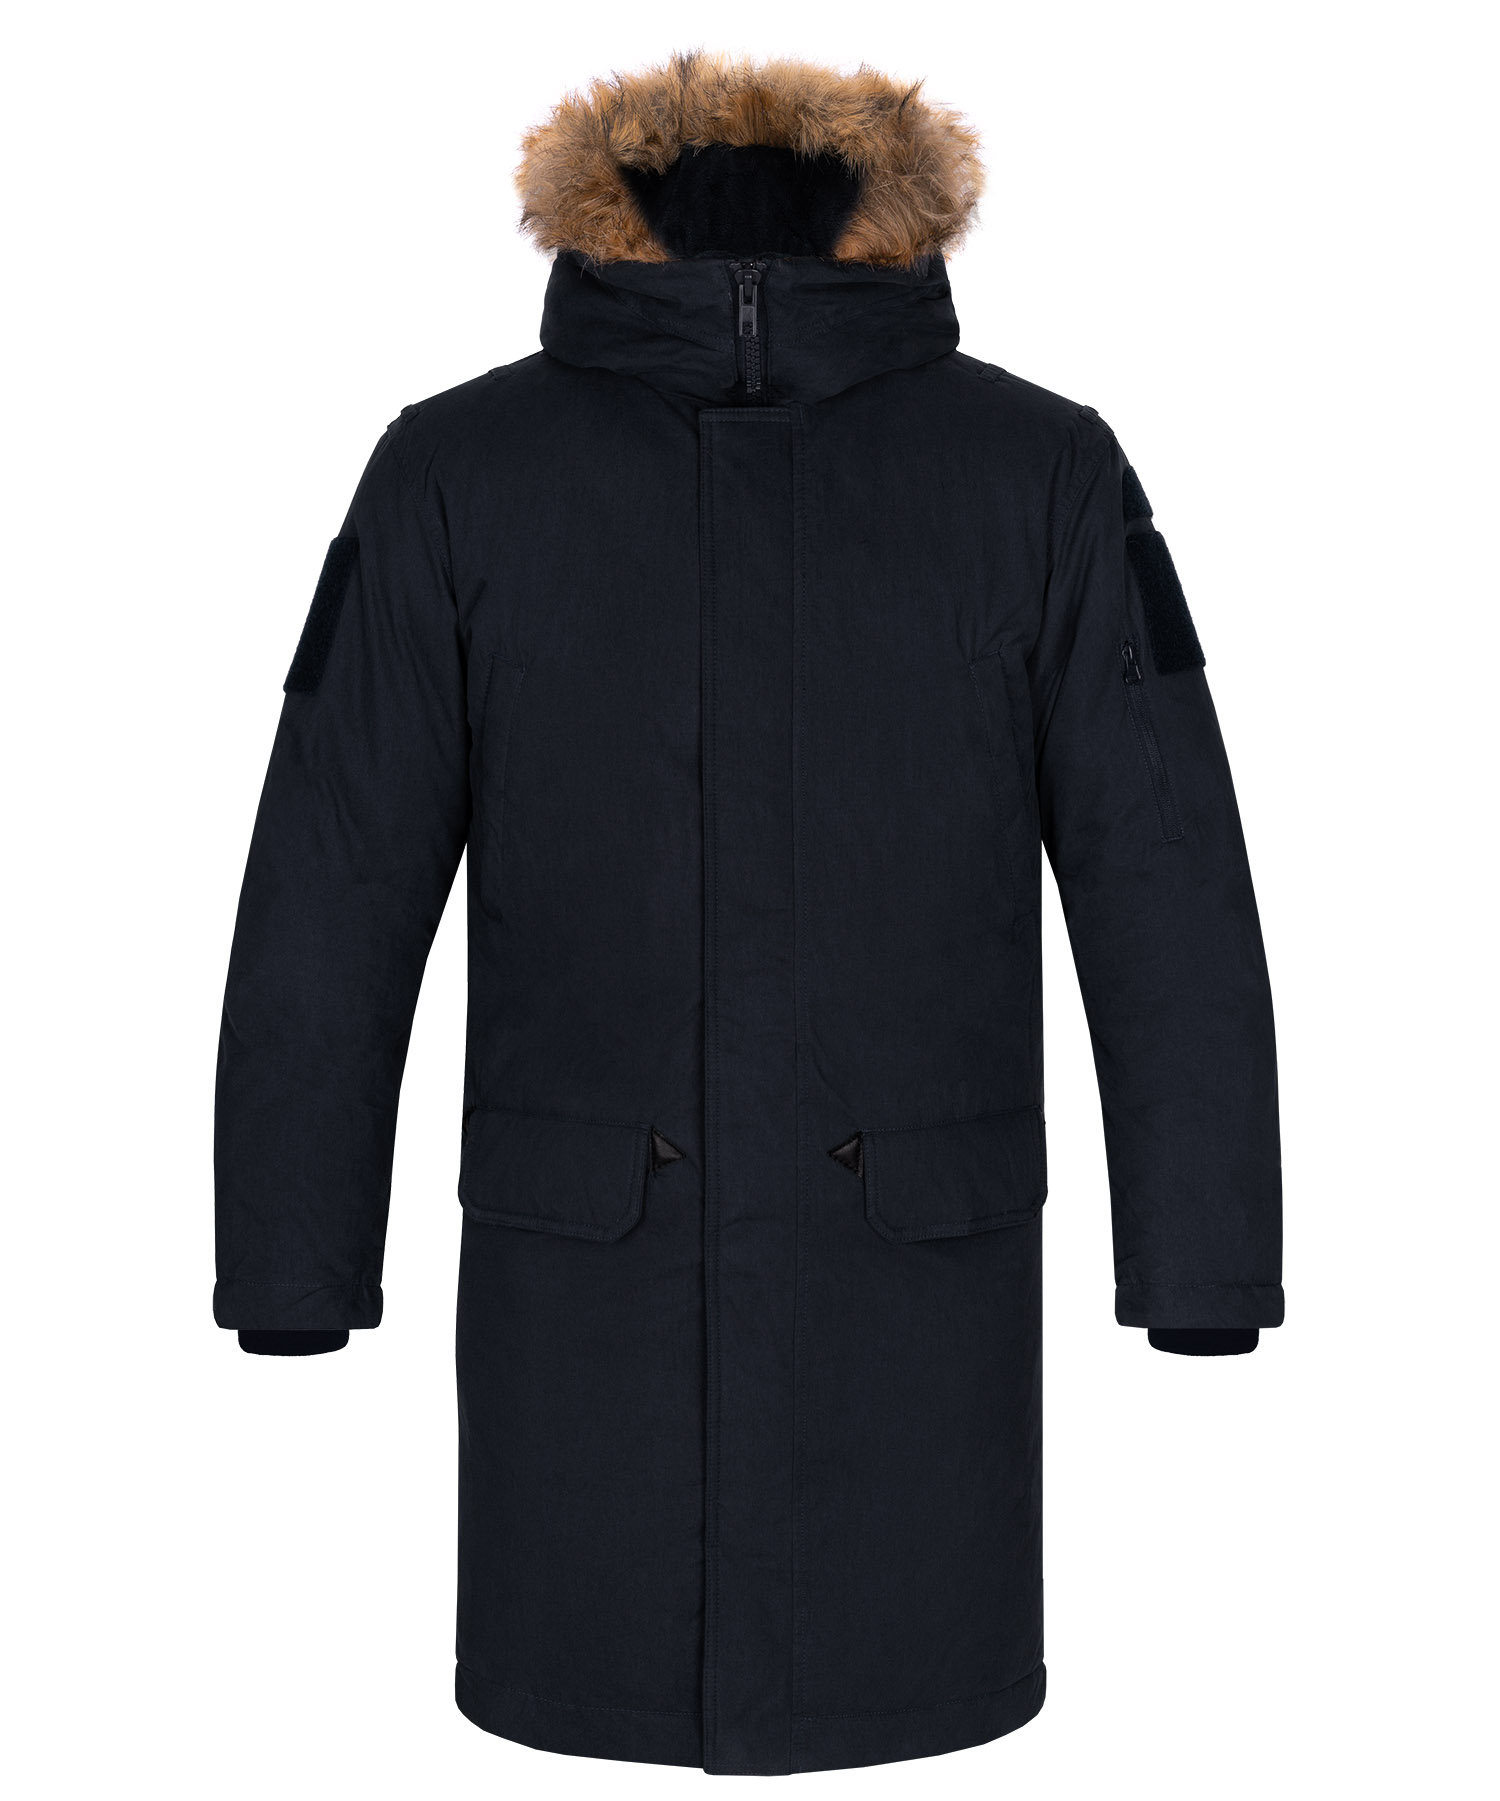 Куртка пуховая Forester К VR, цвет черный 1, размер 34/158 - фото 1